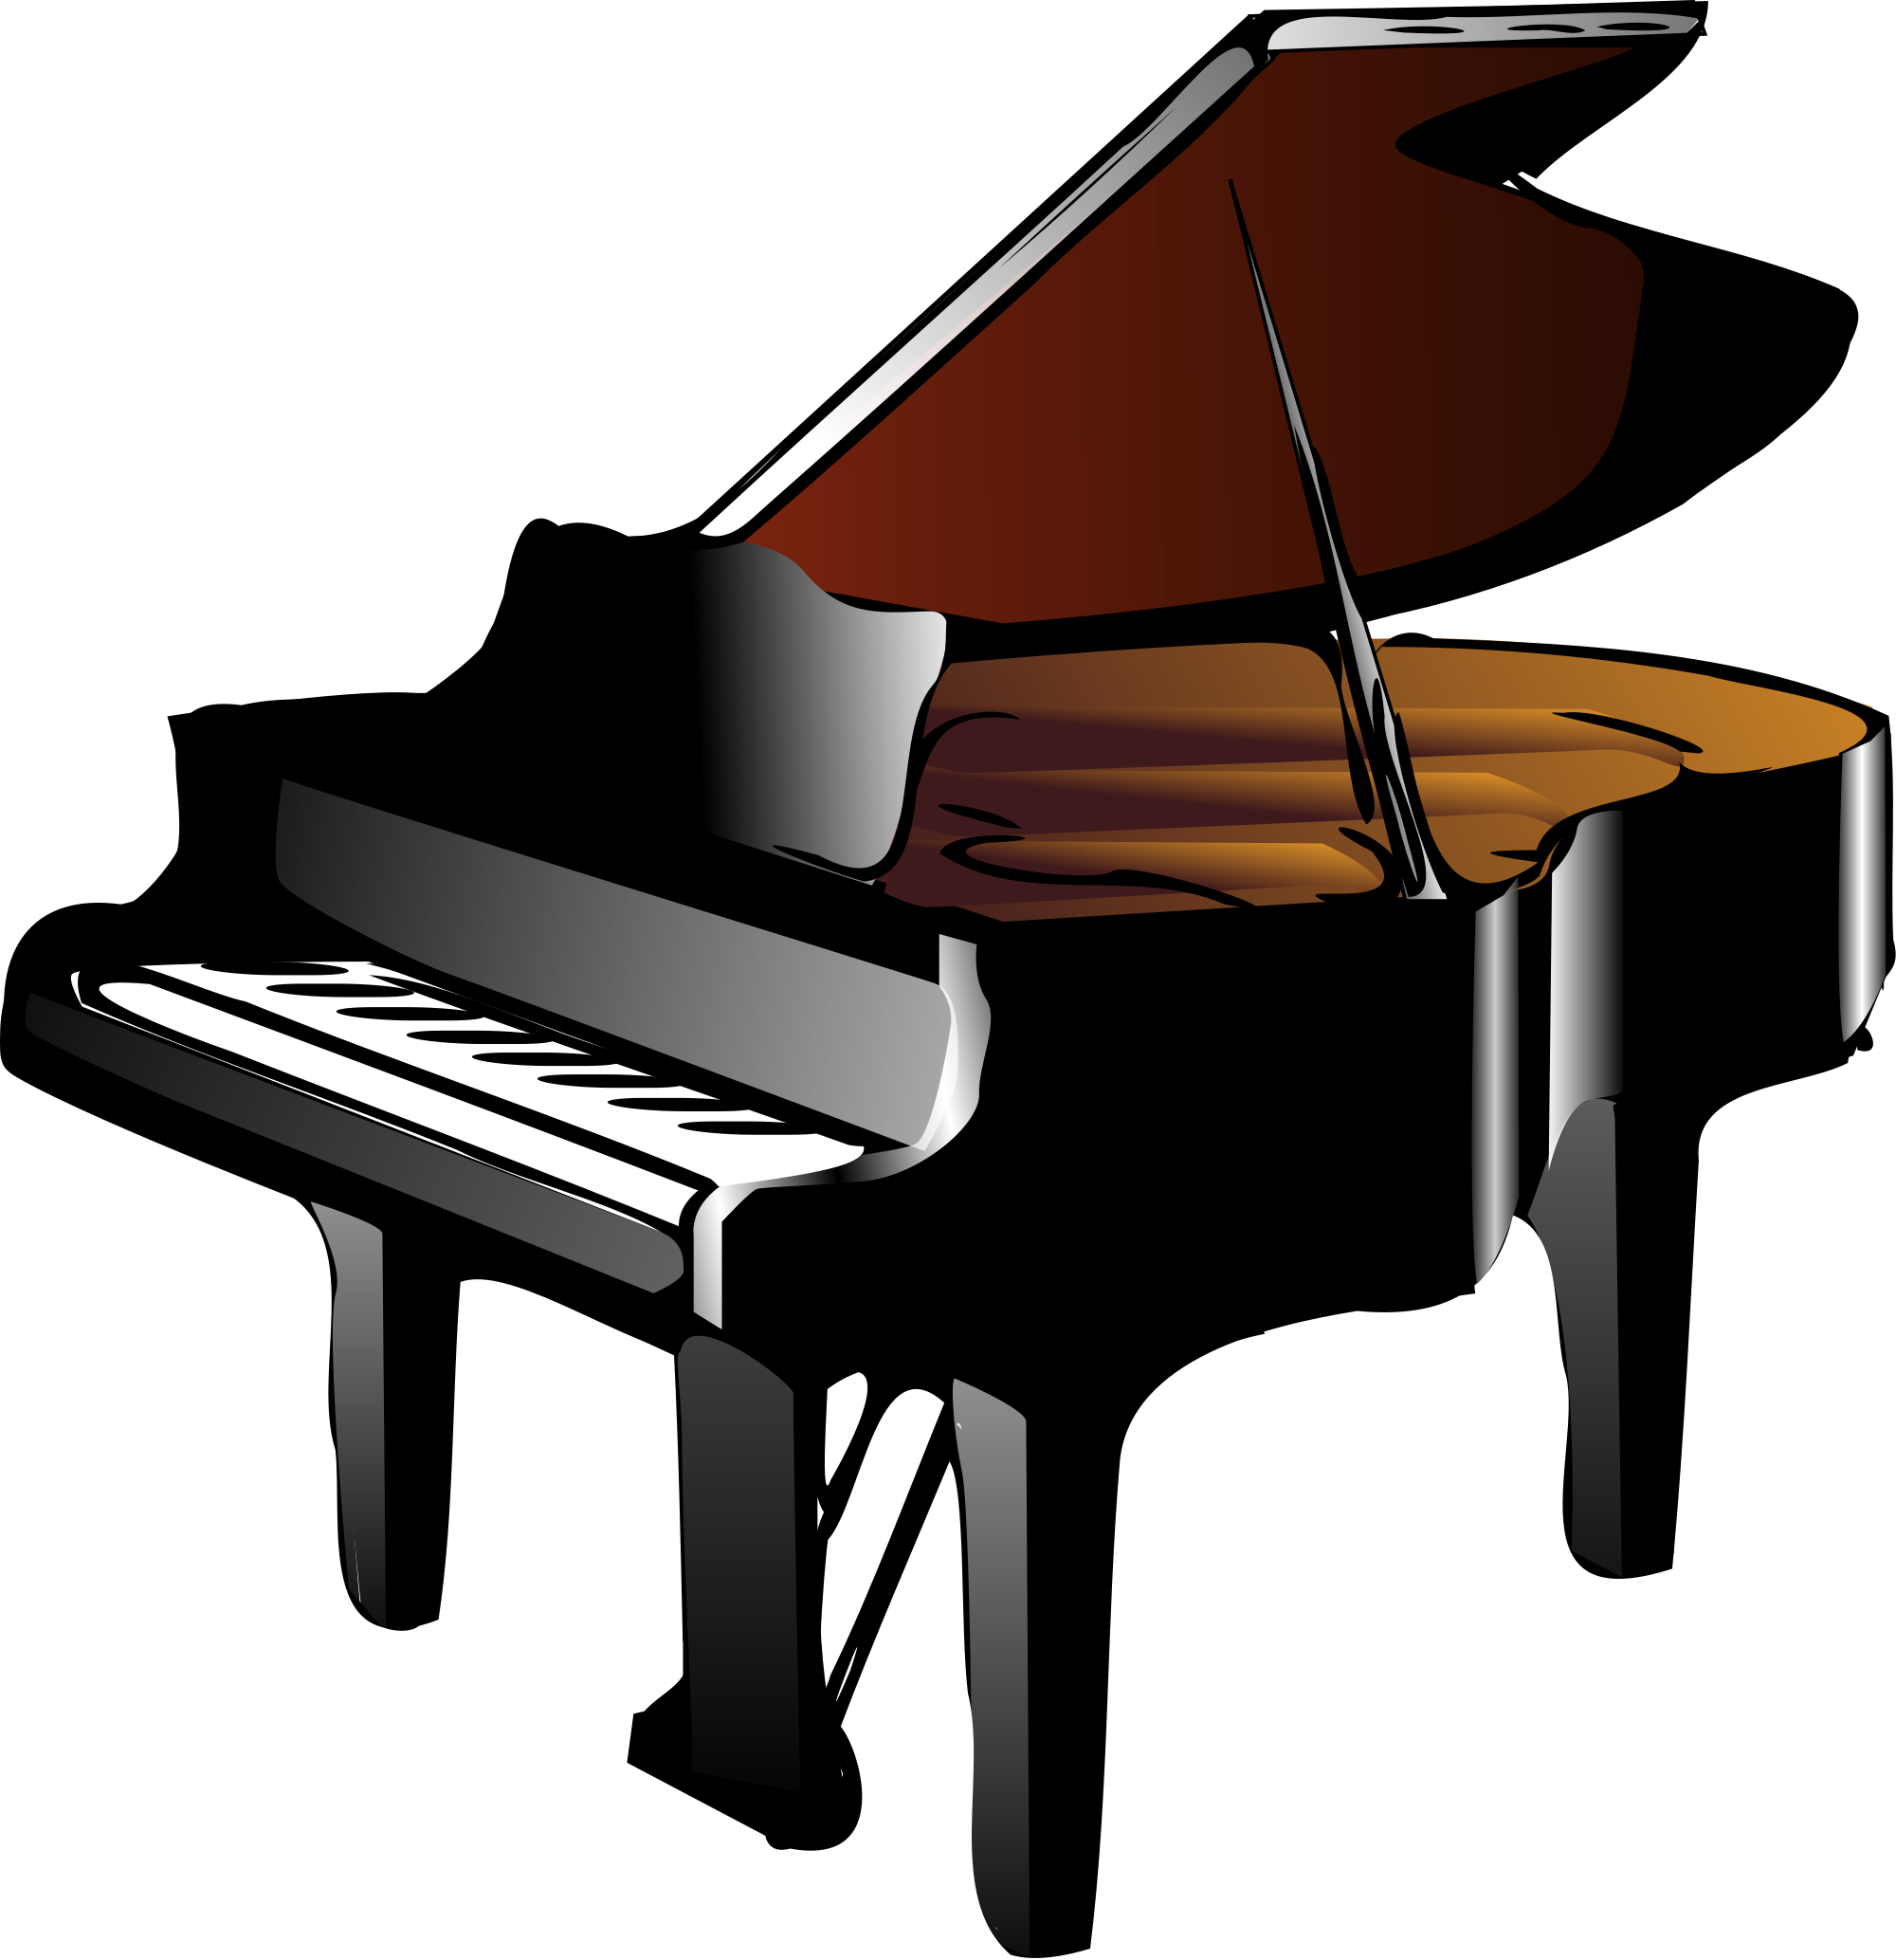 File:Piano.svg - Wikimedia Commons